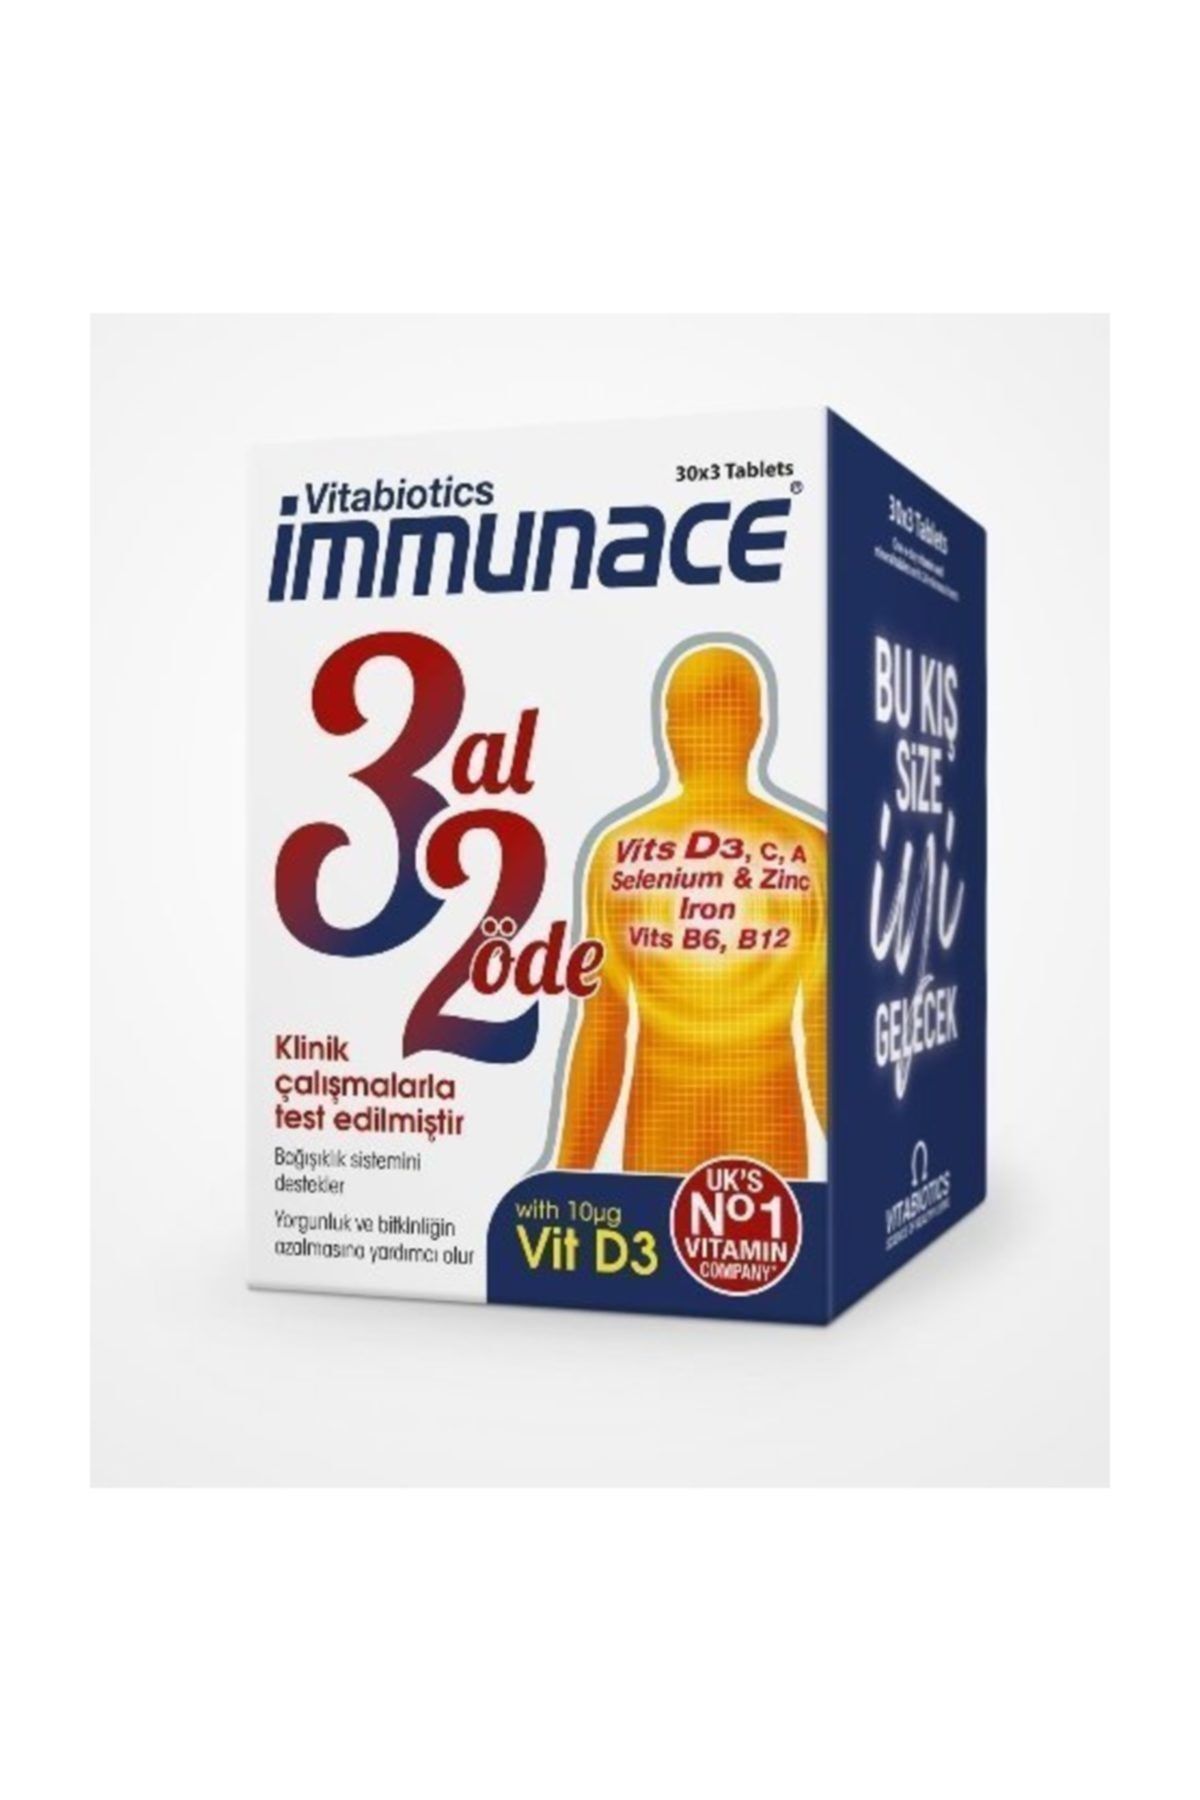 Immunace  30 Tablet 3 Al 2 Öde